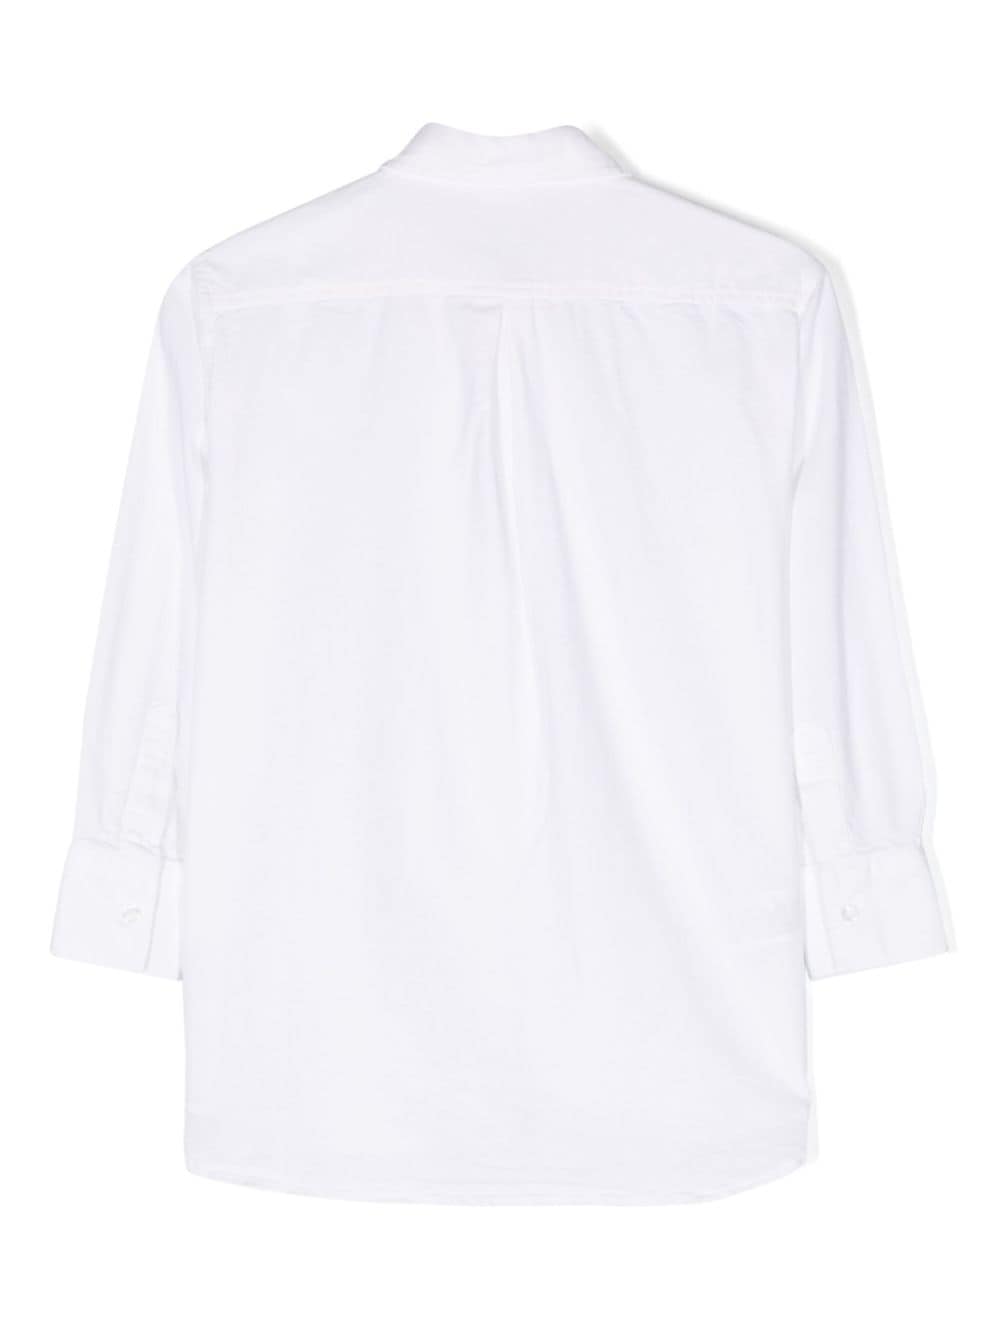 Image 2 of Aspesi Kids long-sleeve cotton shirt